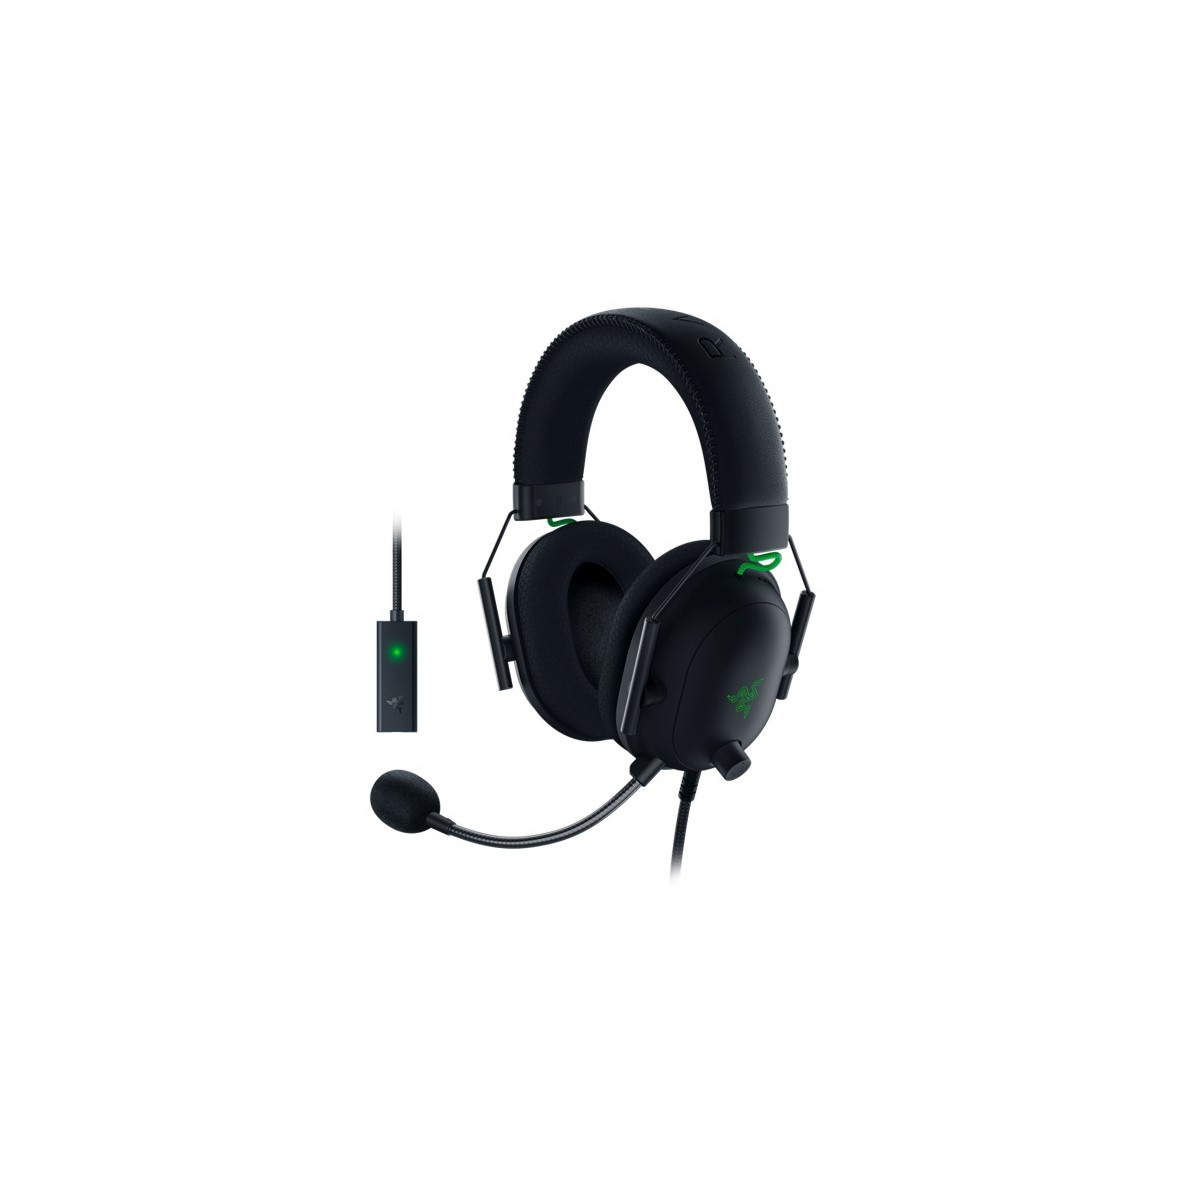 Razer Blackshark V2 - Headset - Head-band - Gaming - Black - Green - Binaural - Rotary